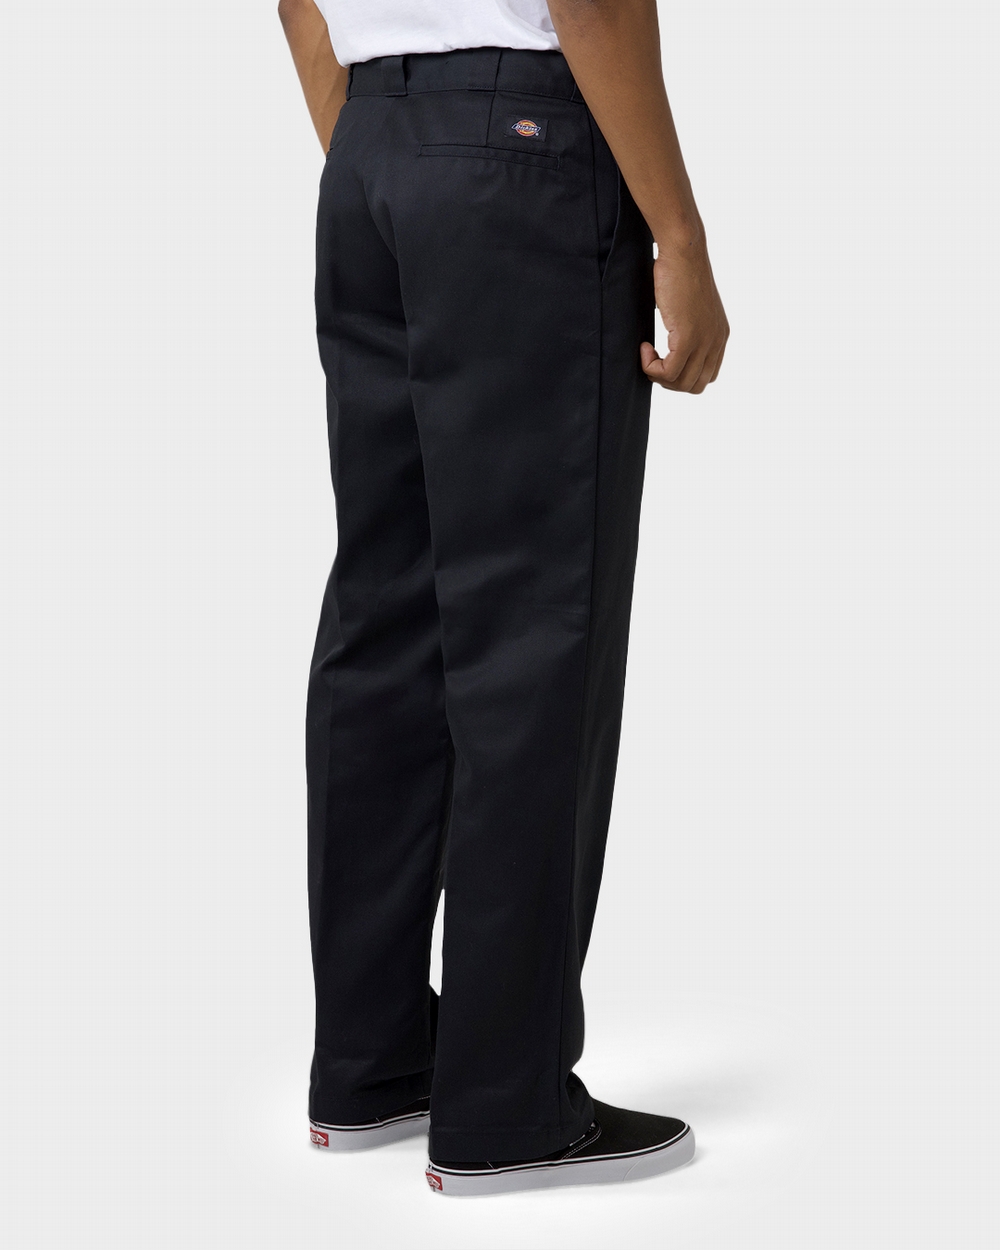 Scruffs Trade Flex Holster Pocket Trousers 28 R Black  Toolstation